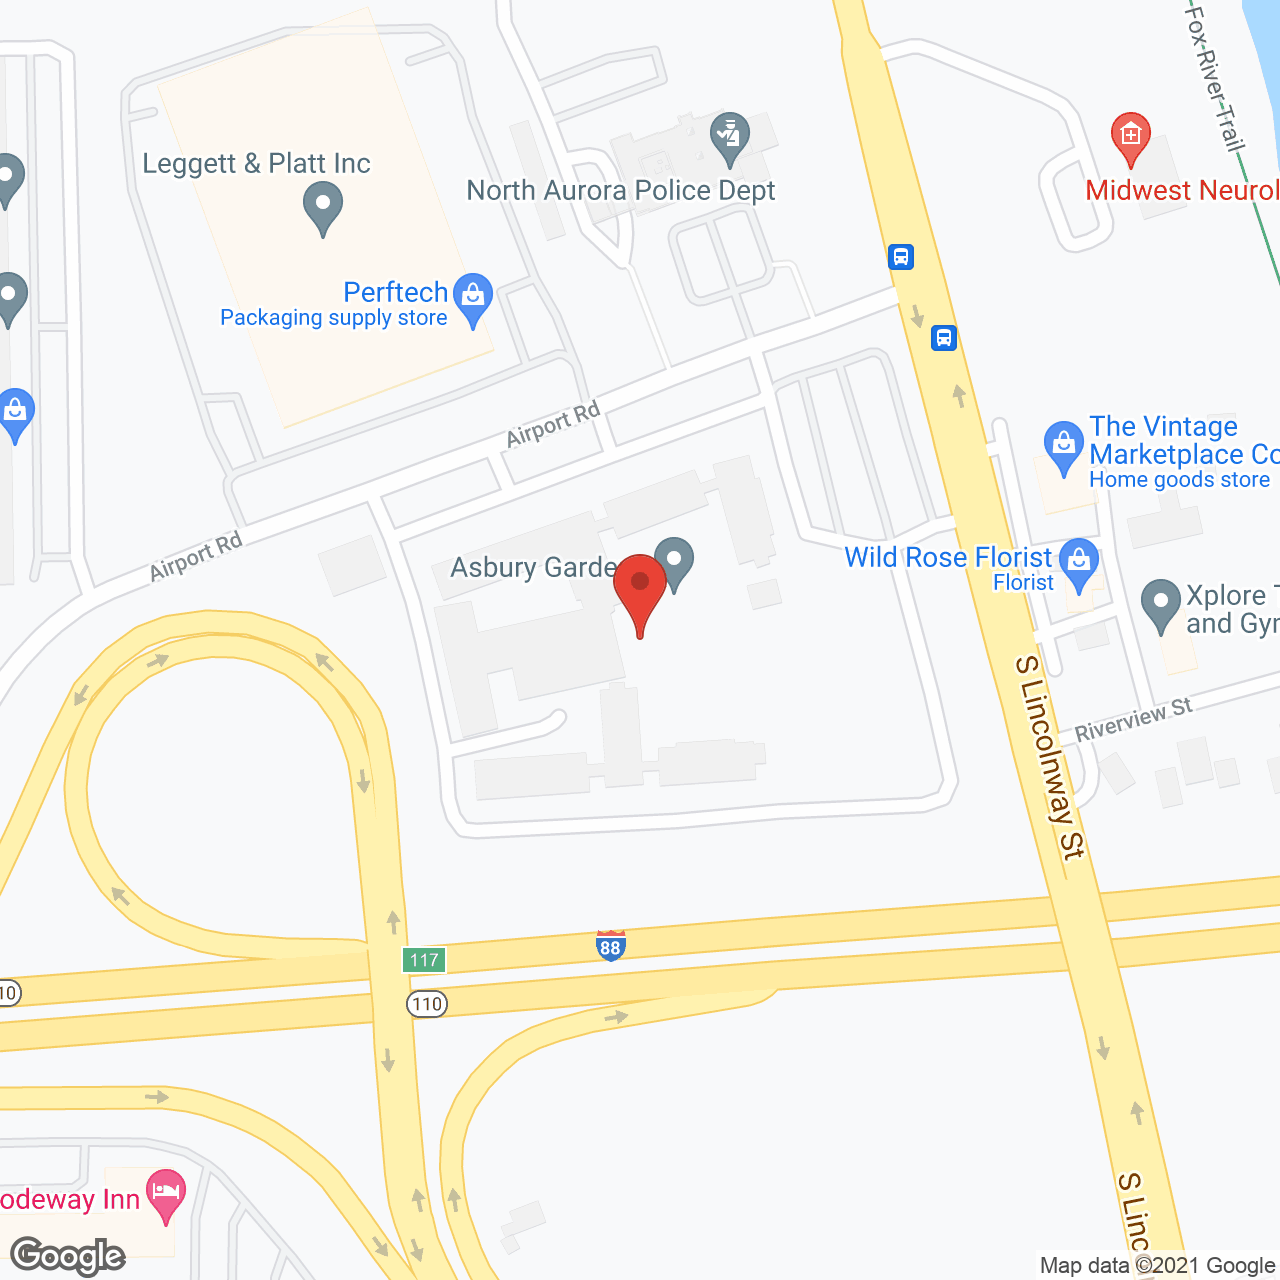 Asbury Gardens in google map